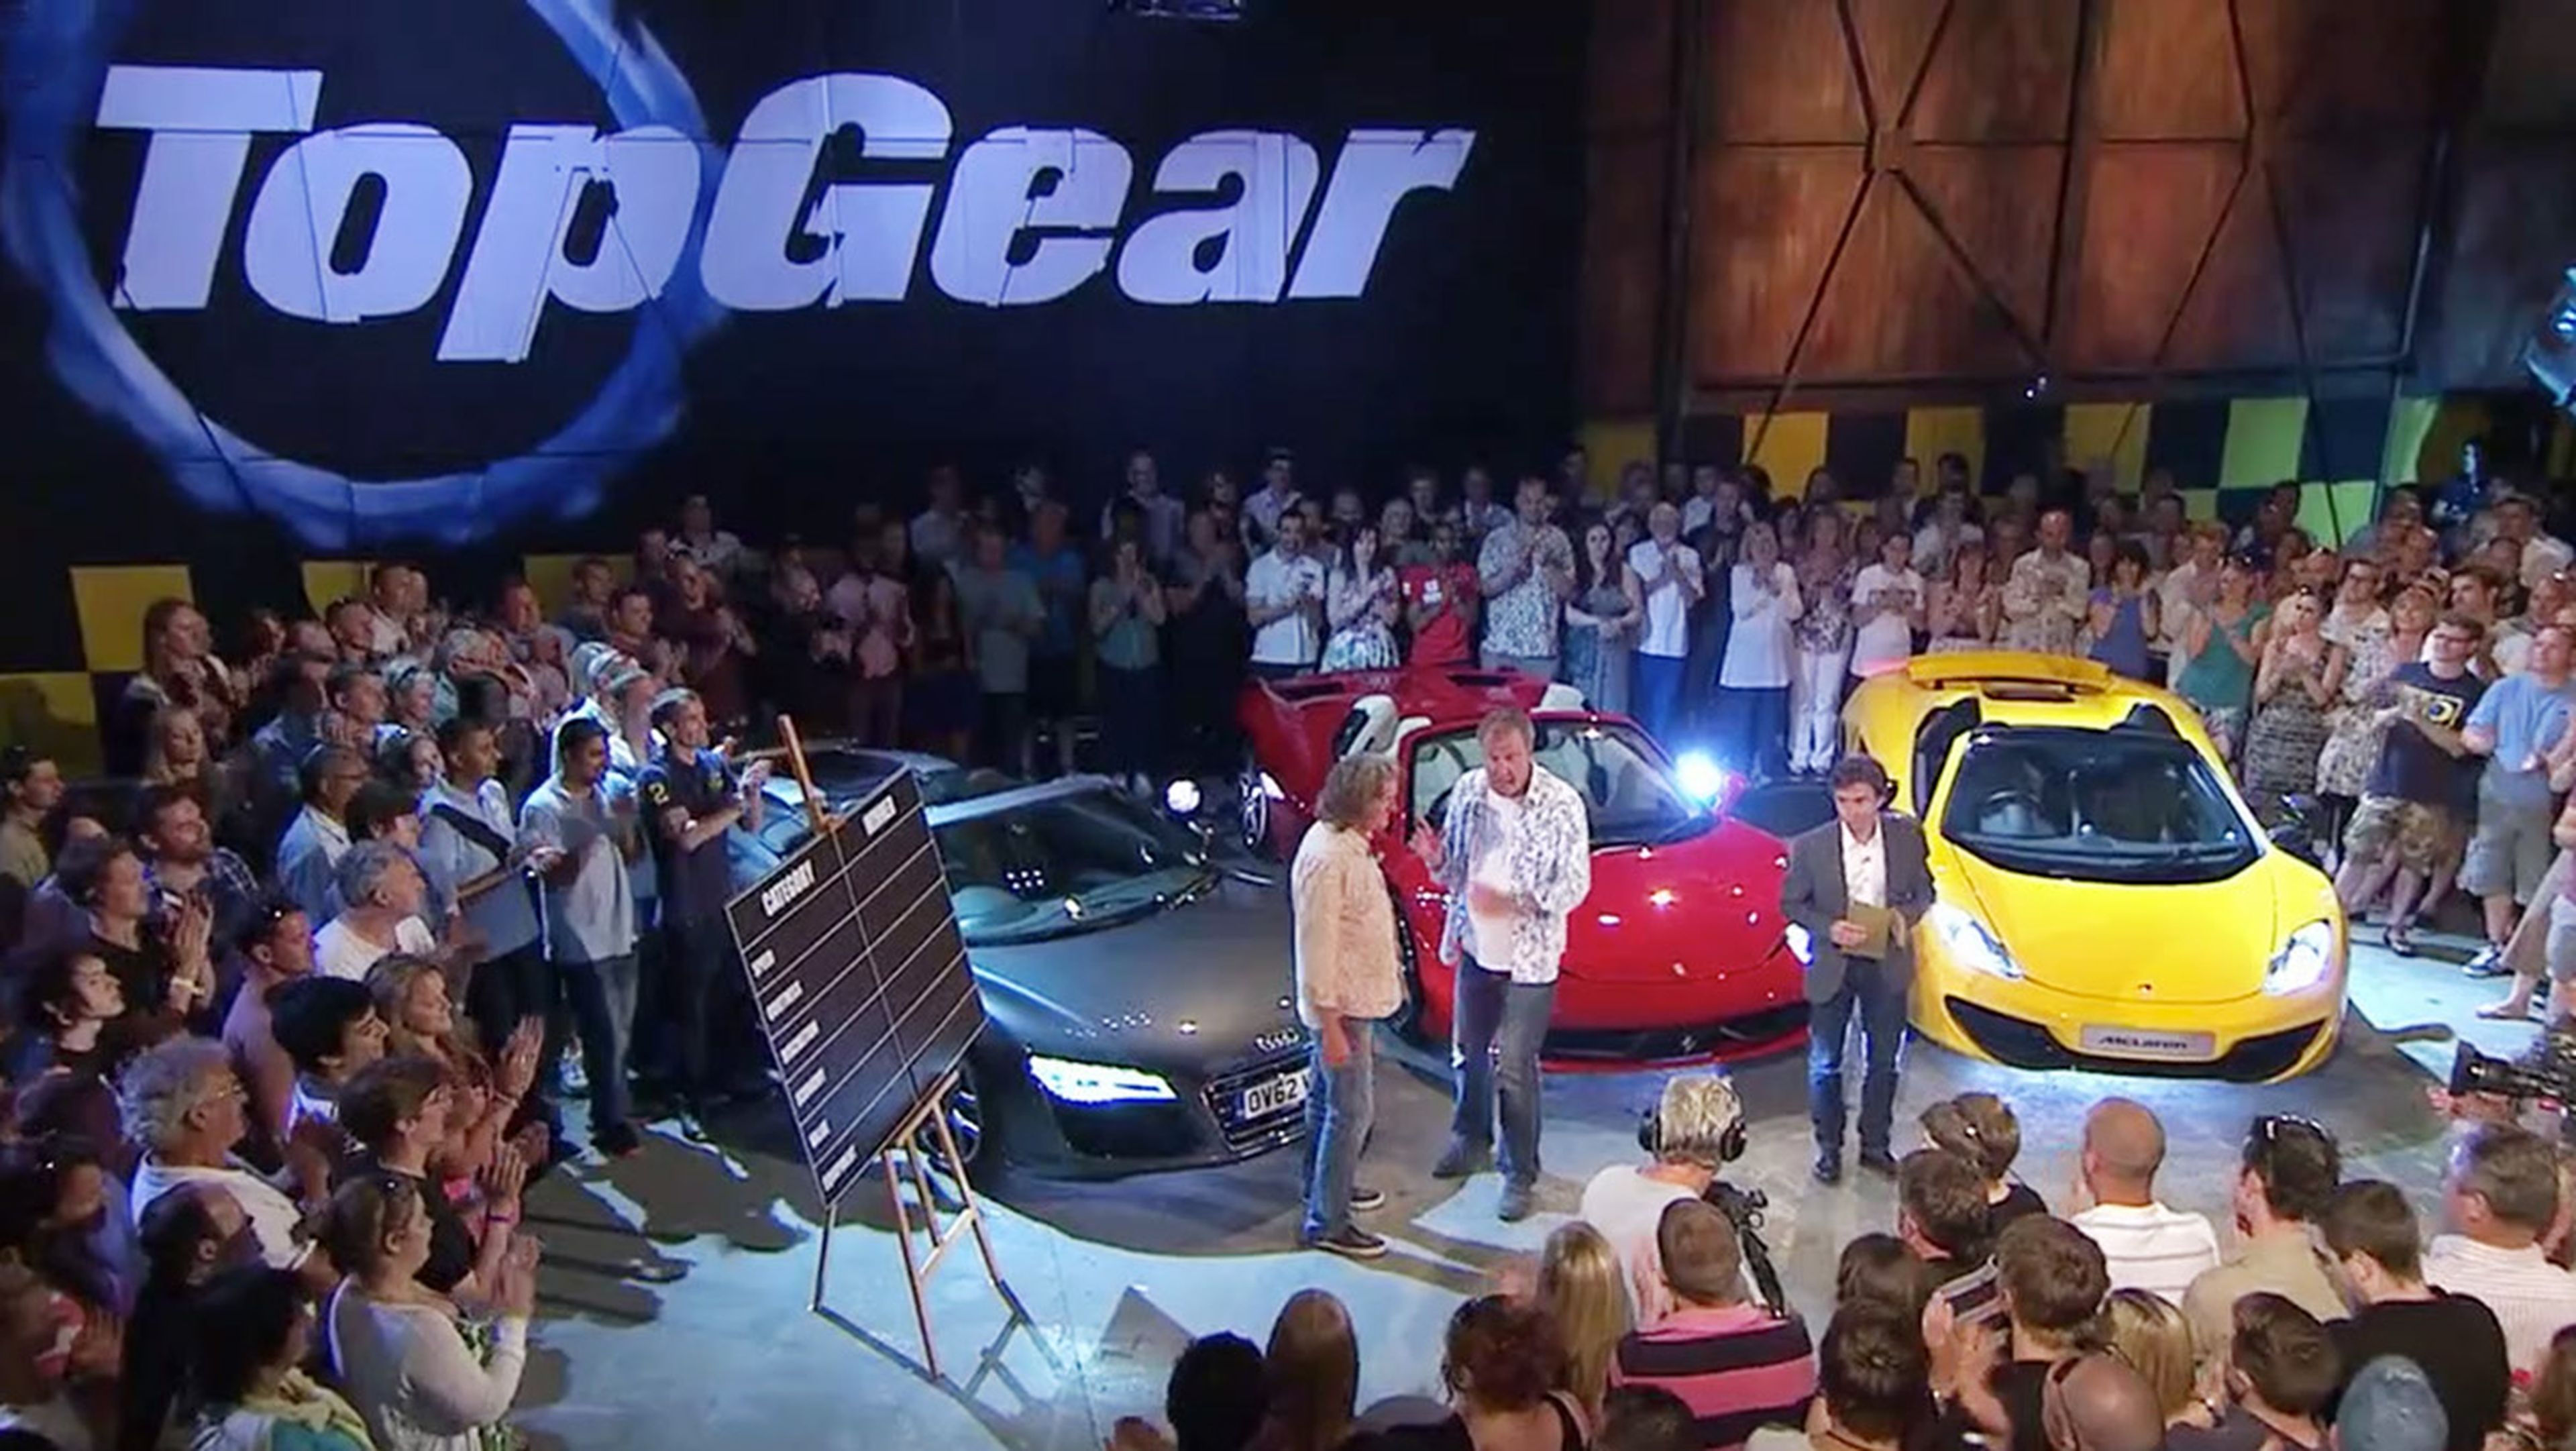 El programa de Top Gear en España: ¡Seseña!